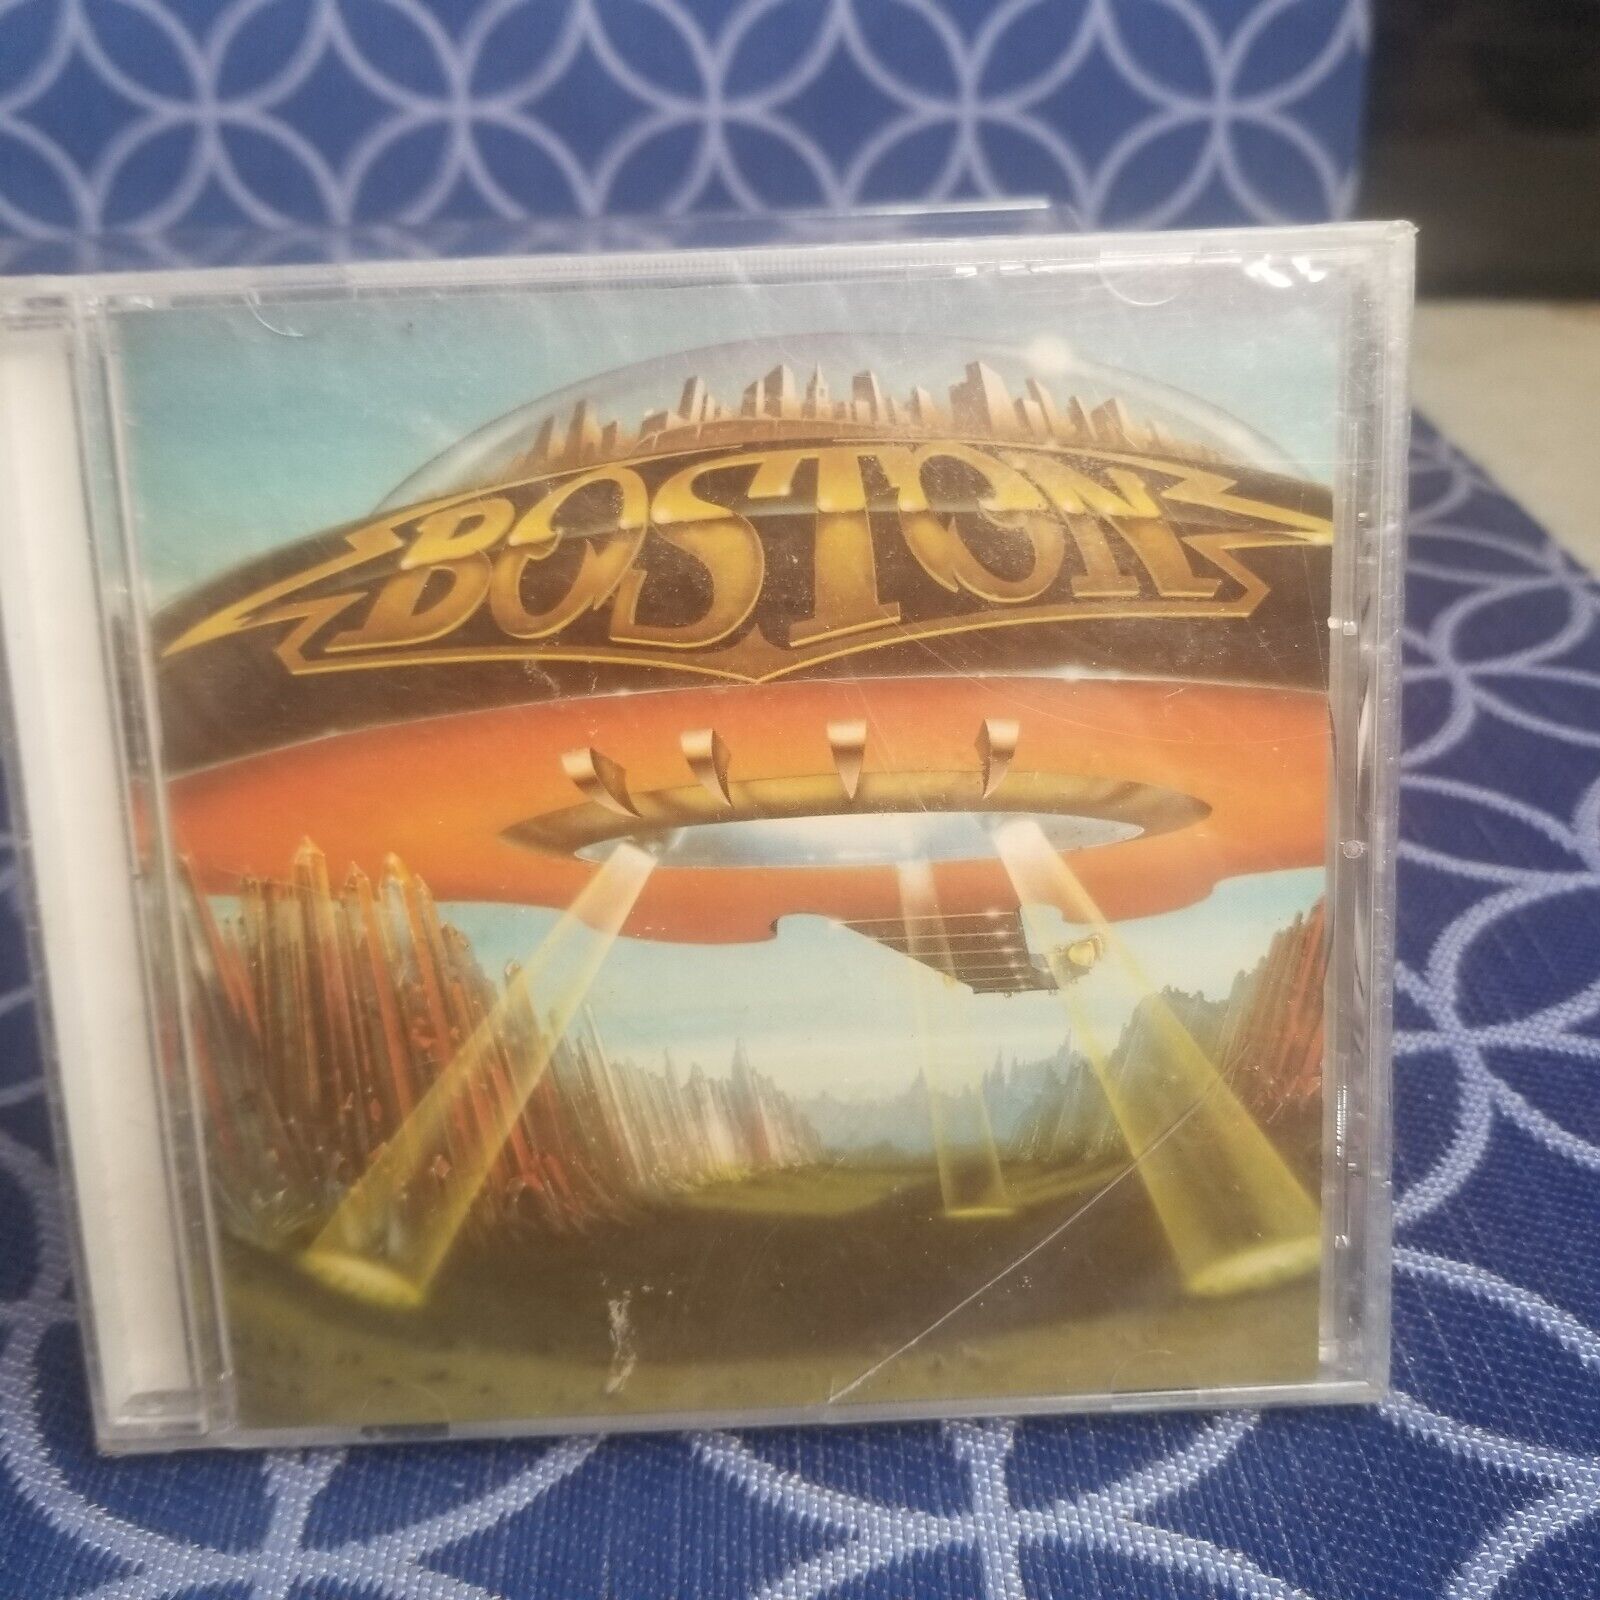 Boston – Don\'t Look Back (CD 1986) Arena Rock, Classic Rock